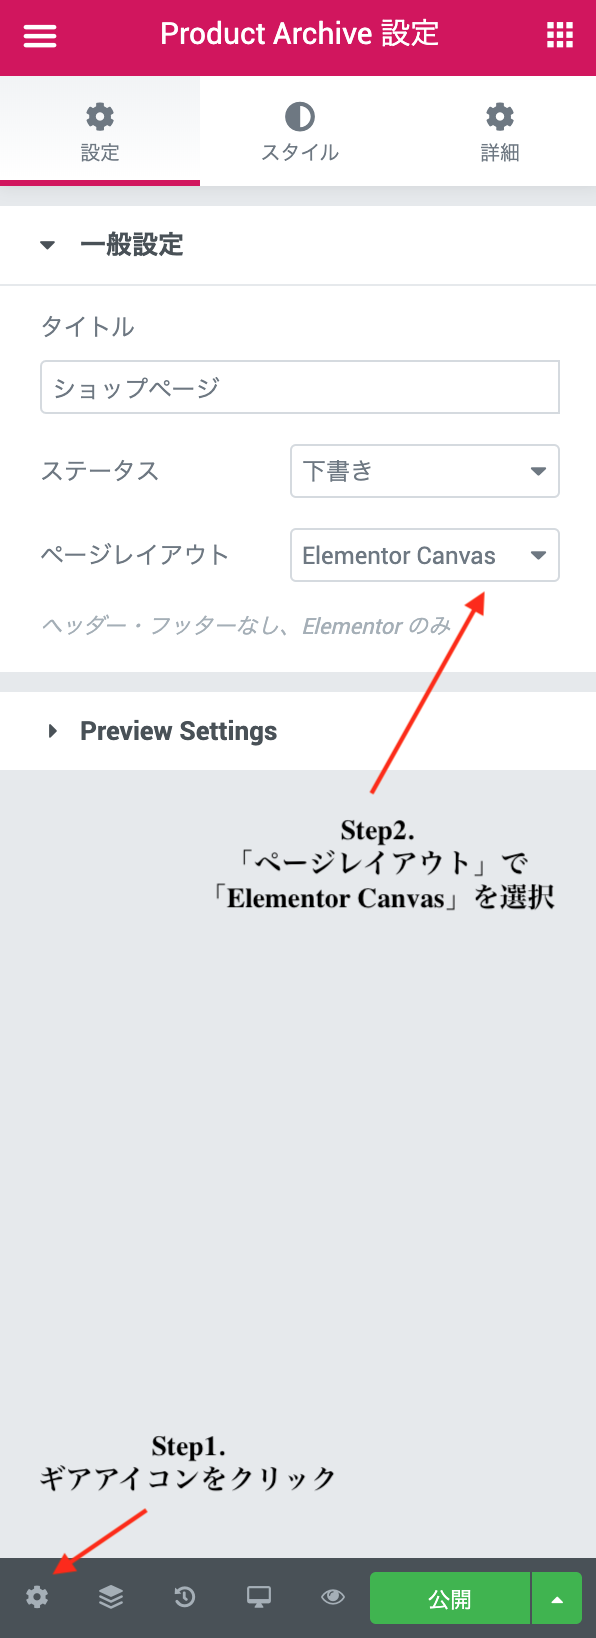 Elementor Canvasを選択 1